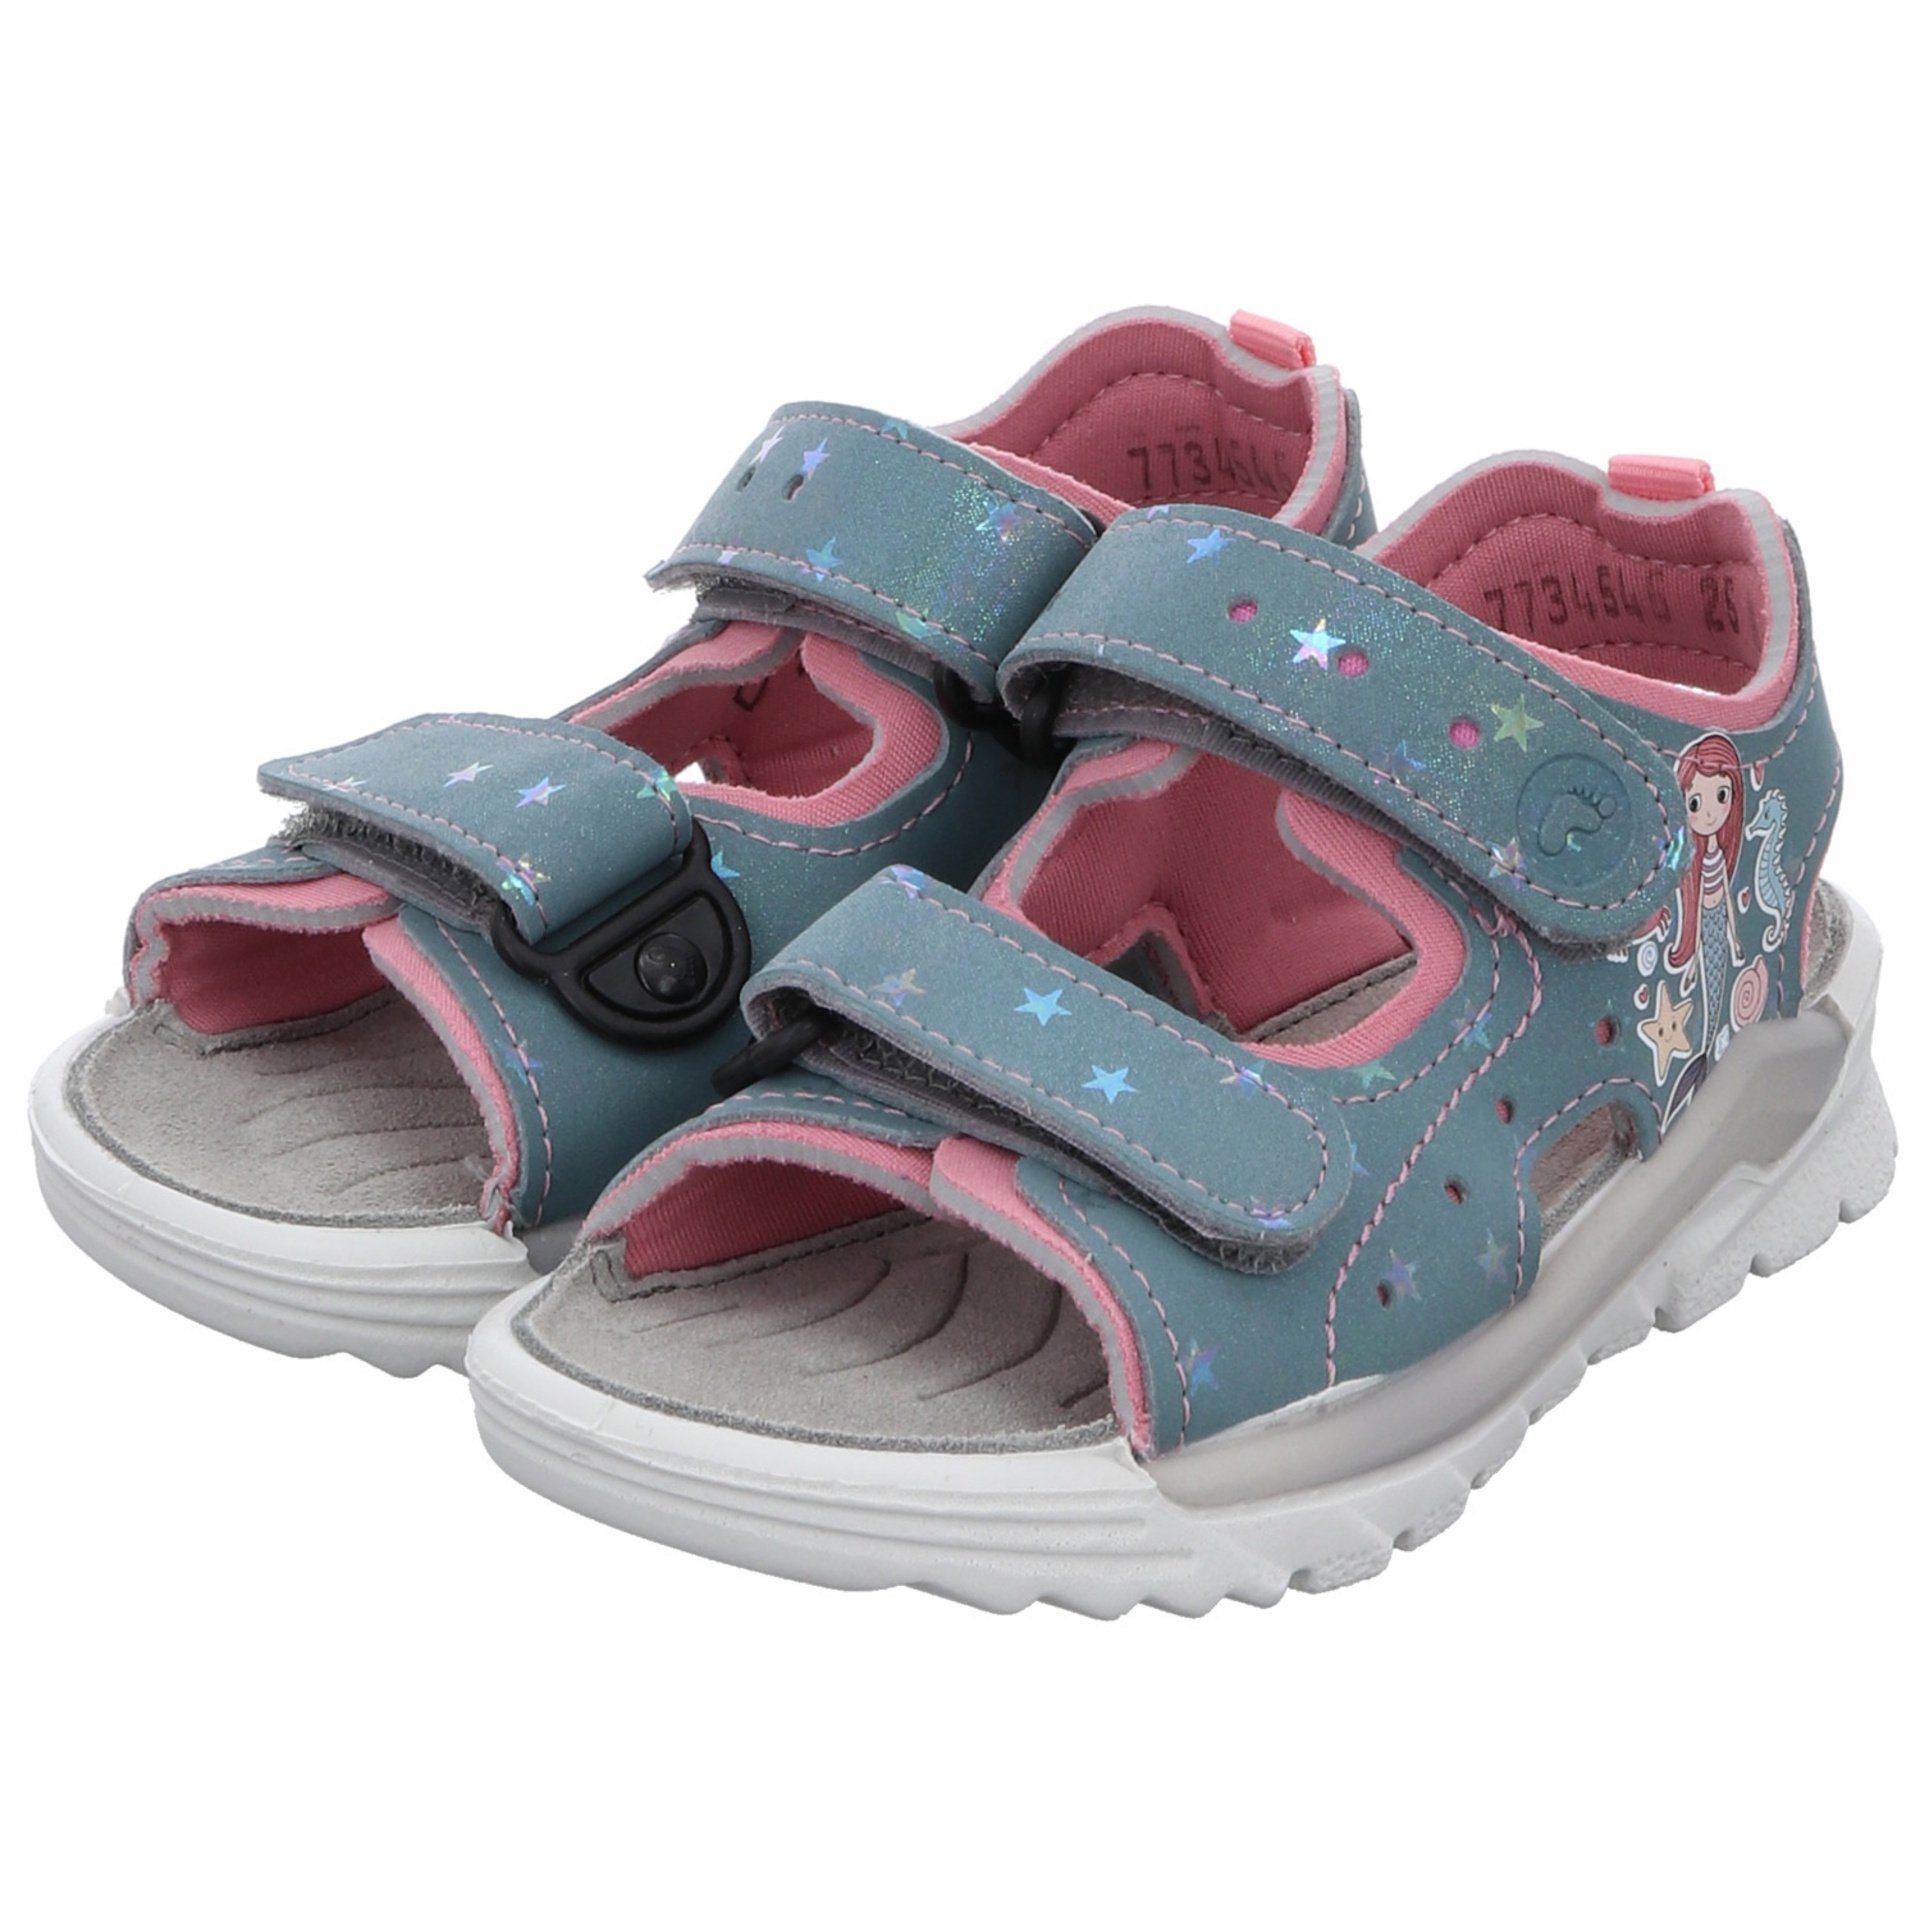 Ricosta Mädchen Sandalen arctic/mallow (130) Surf Schuhe Sandale Sandale Synthetikkombination Kinderschuhe